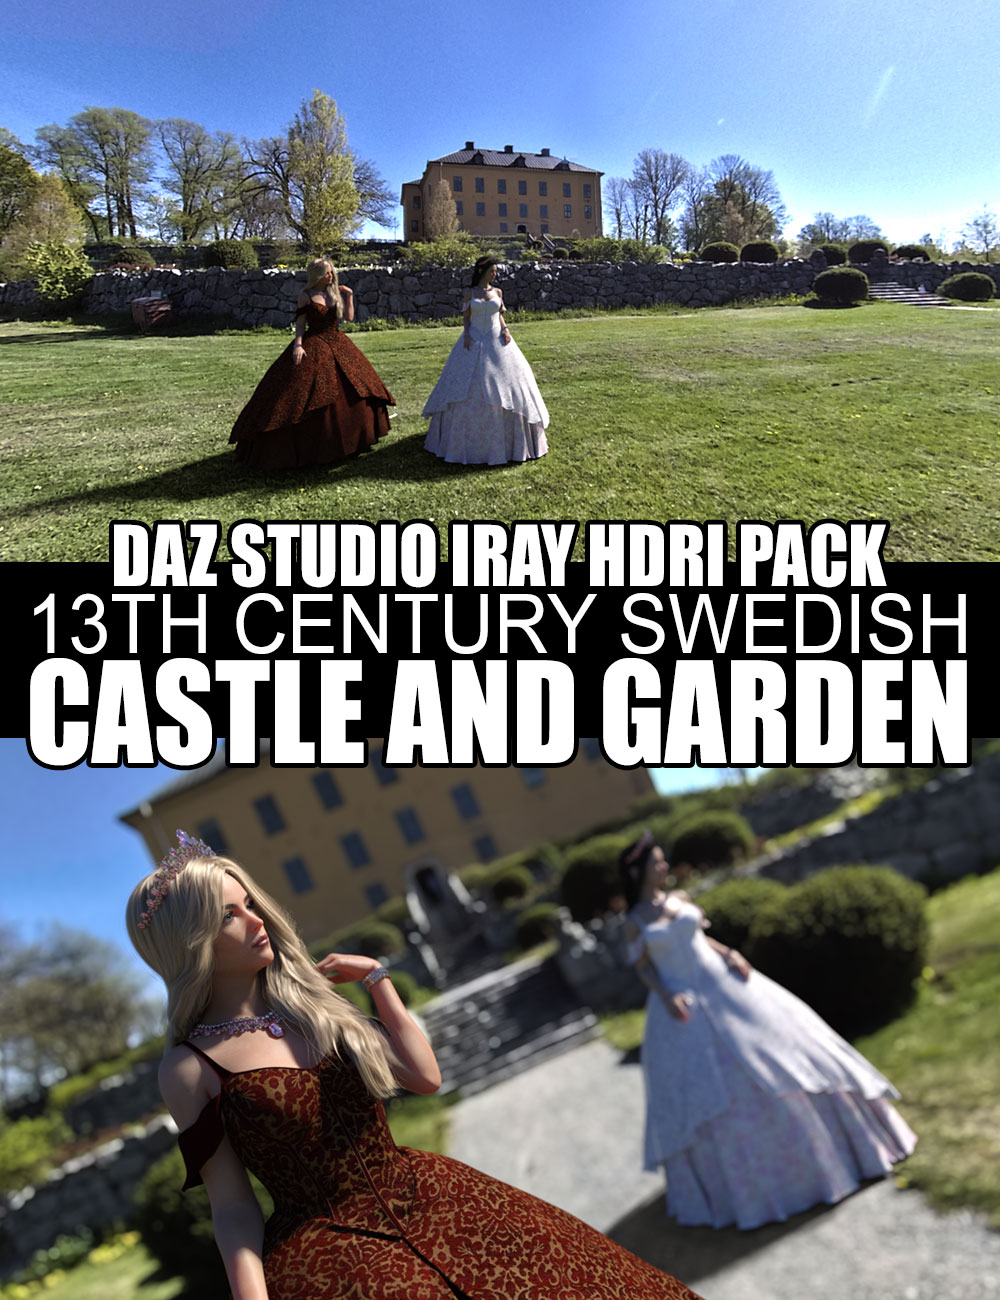 Swedish Castle And Garden - DAZ Studio Iray HDRI Pack by: Dreamlight, 3D Models by Daz 3D